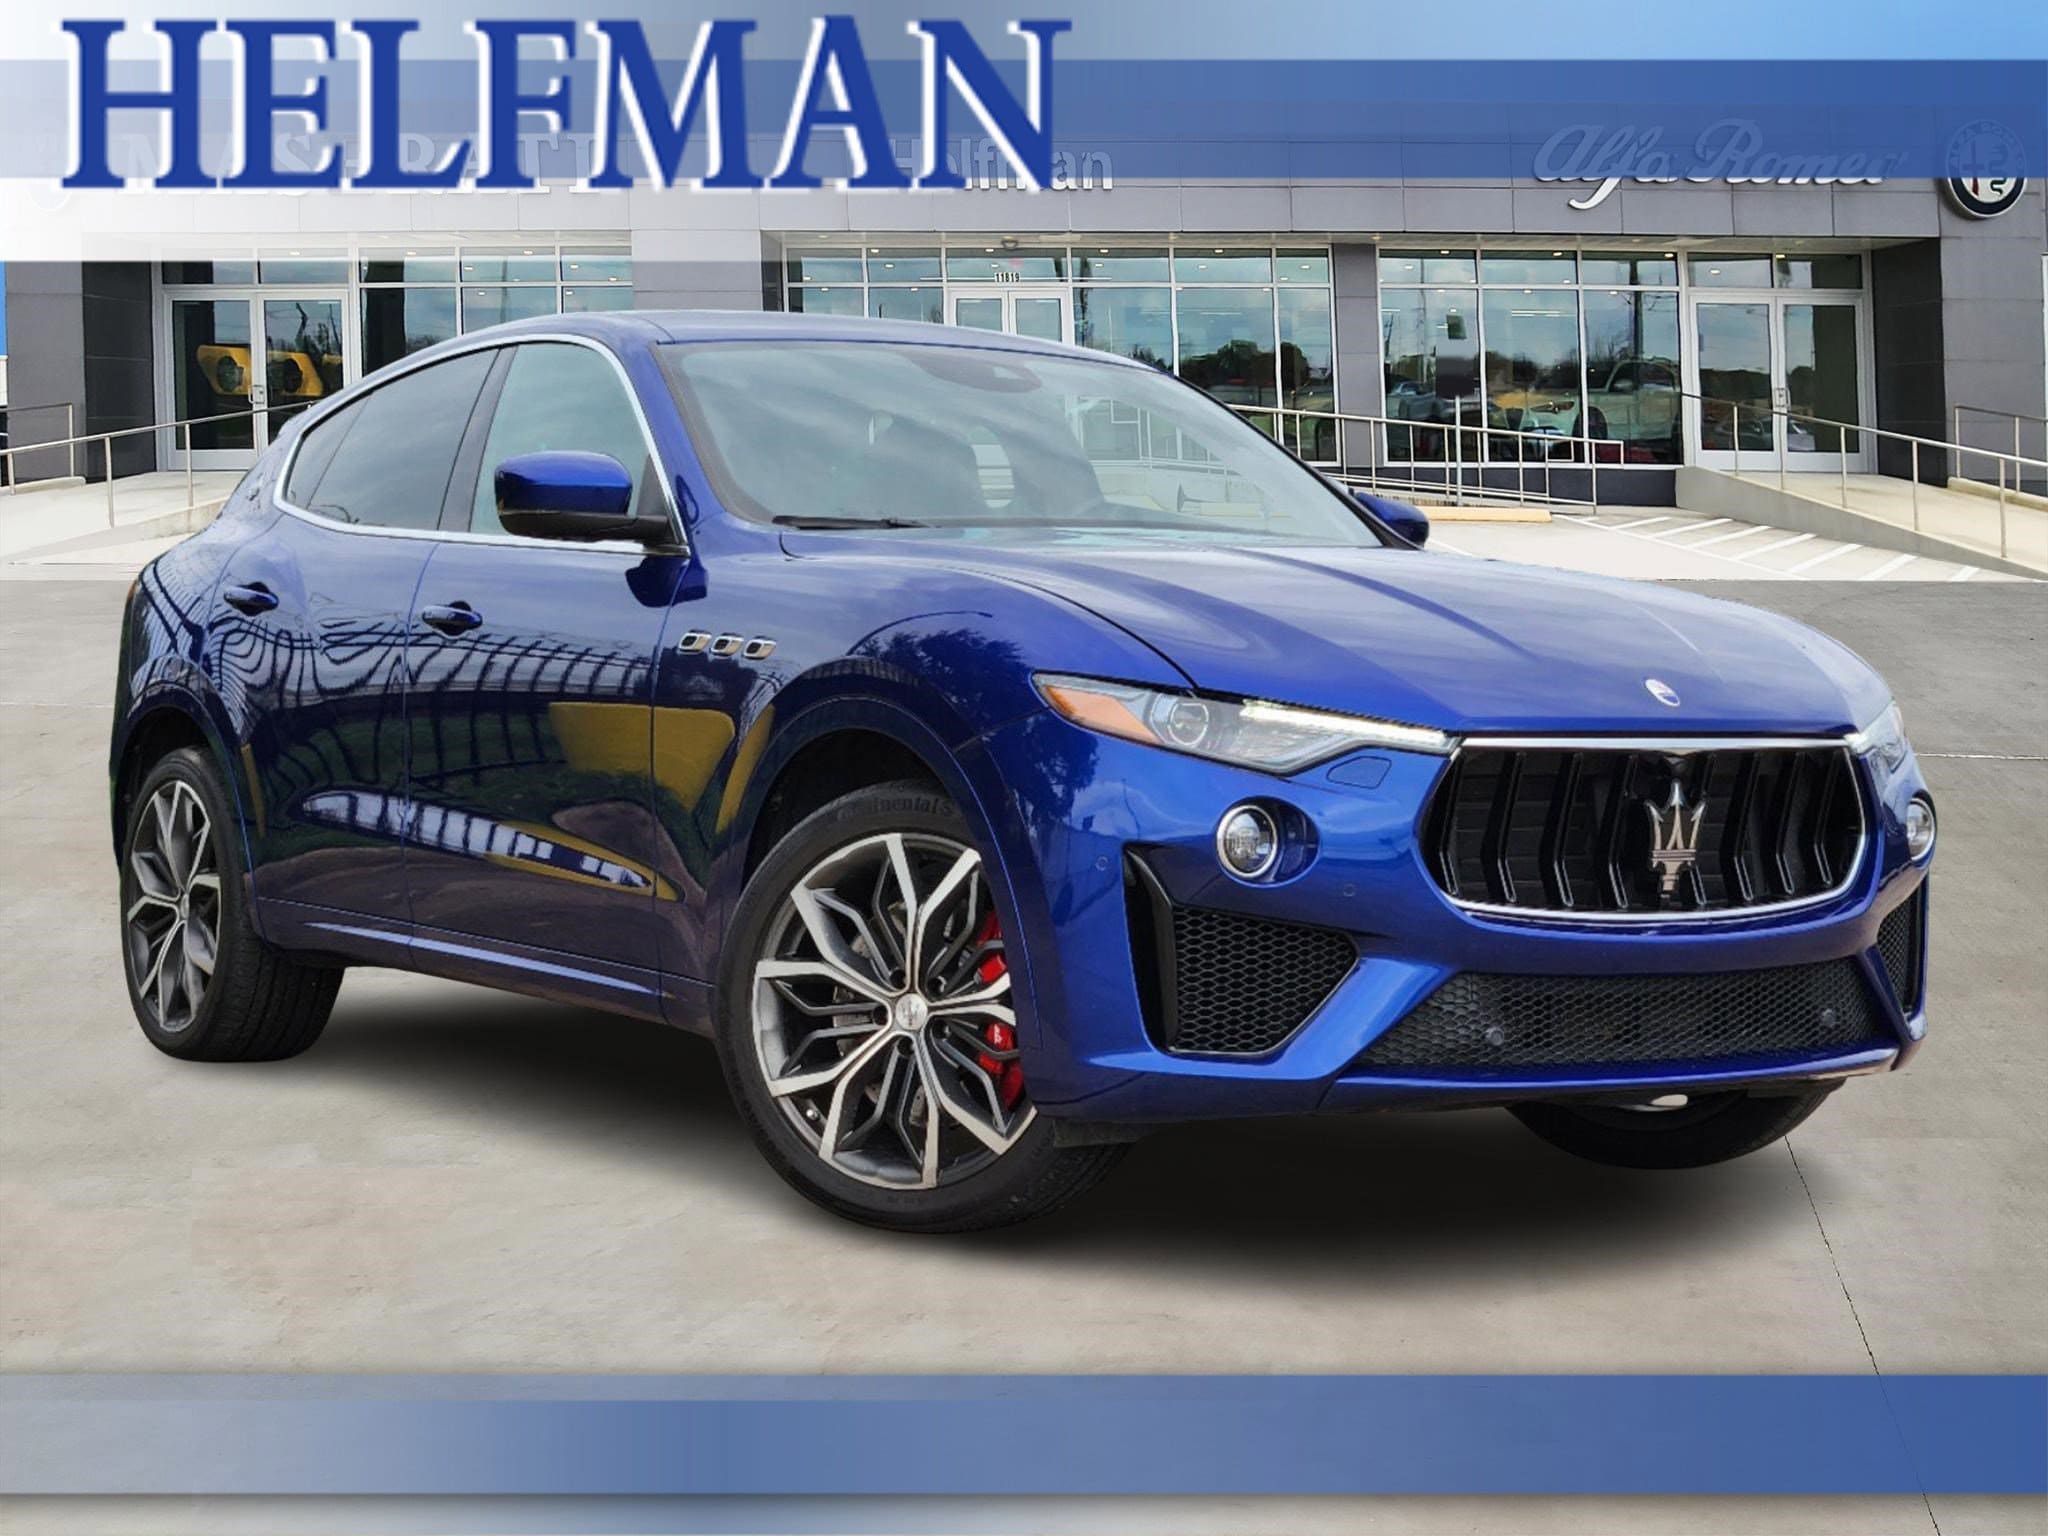 Certified Used 2019 Maserati Levante for Sale Near Houston 